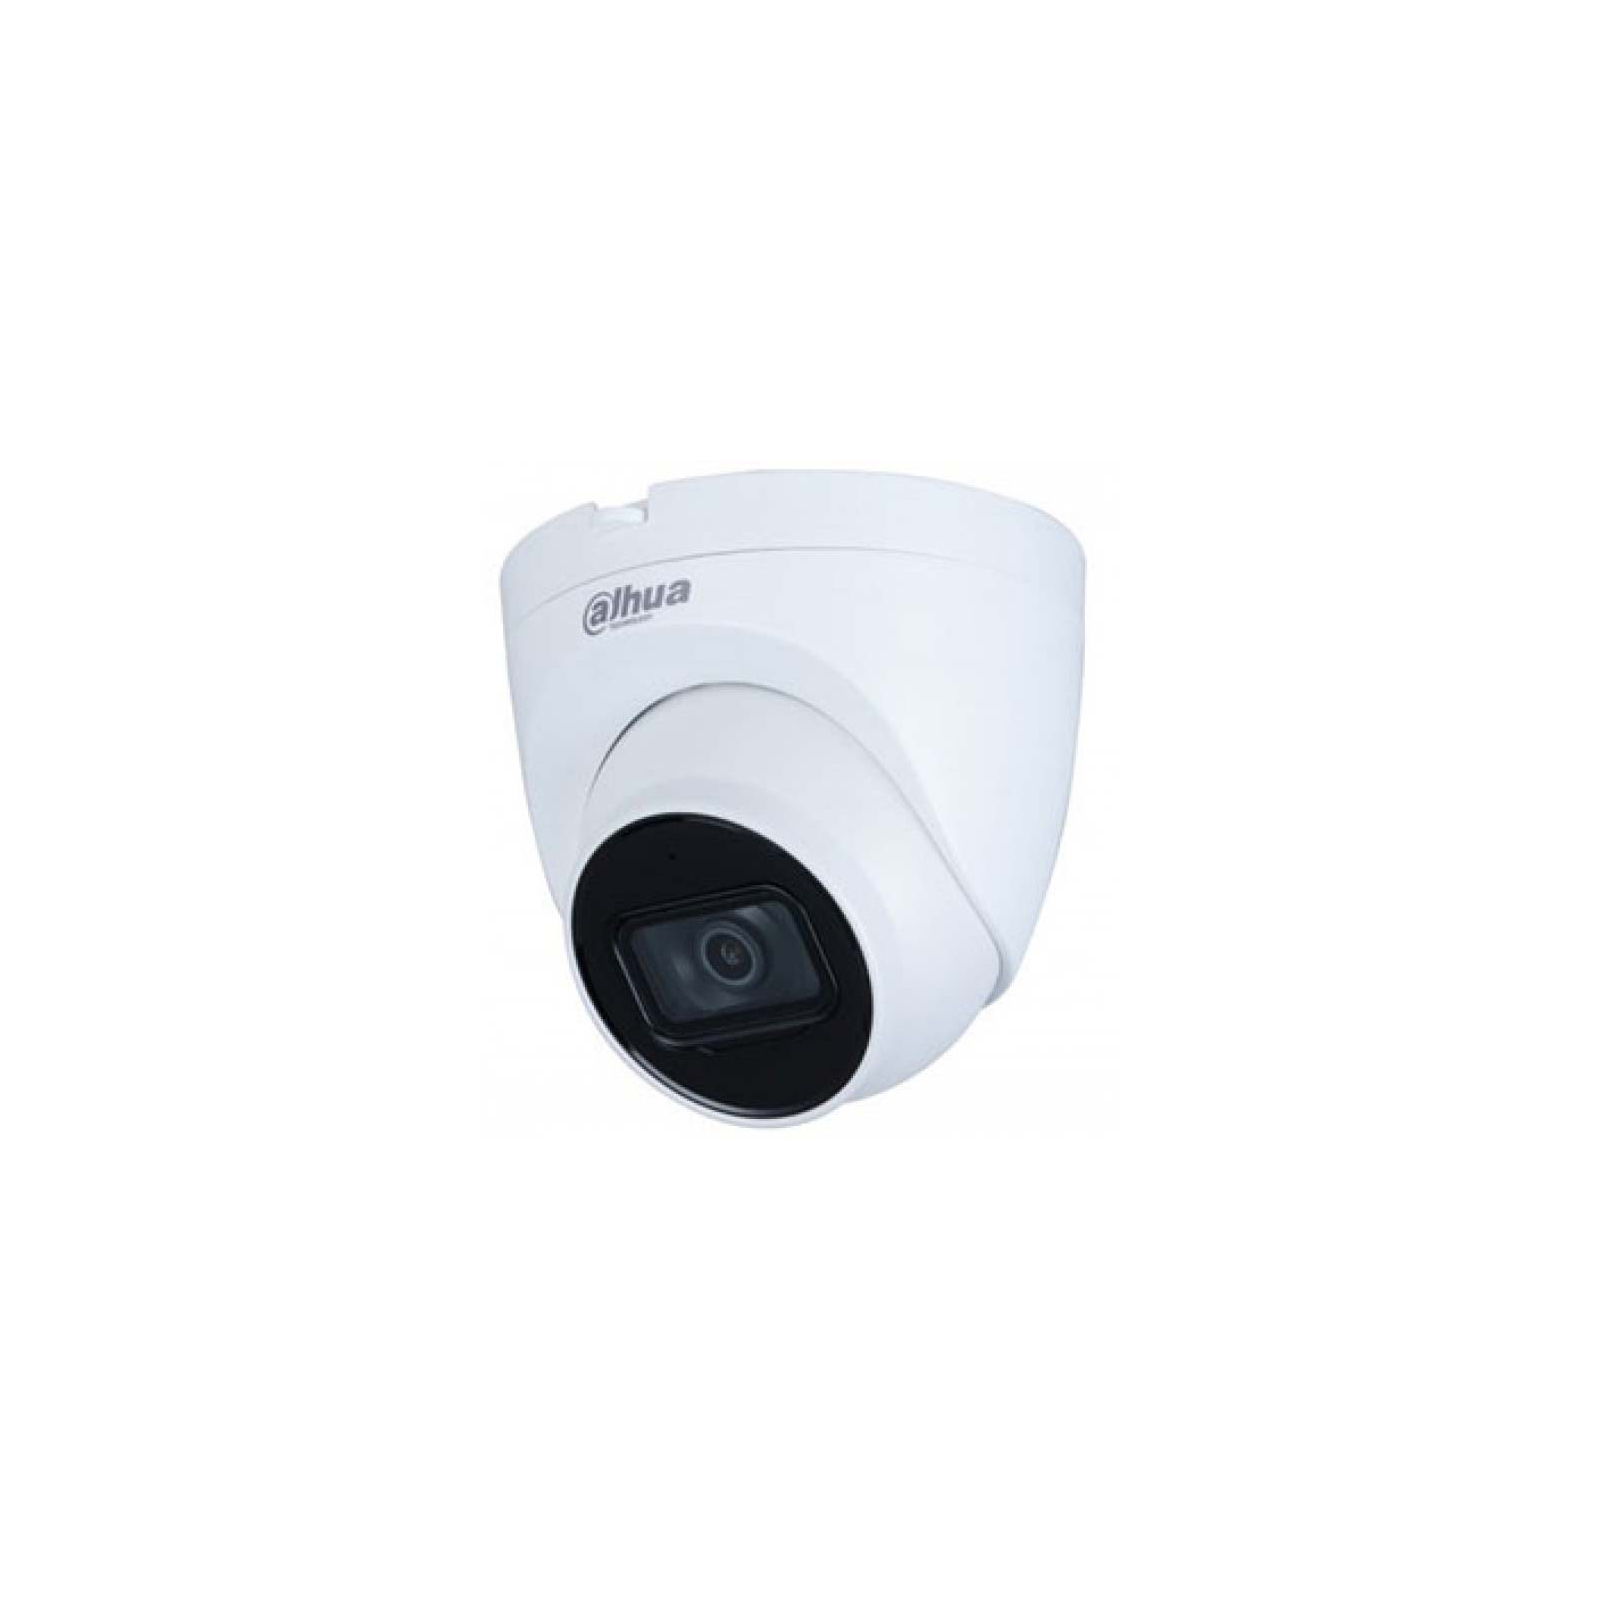 Камера видеонаблюдения Dahua DH-IPC-HDW2230TP-AS-S2 (2.8)